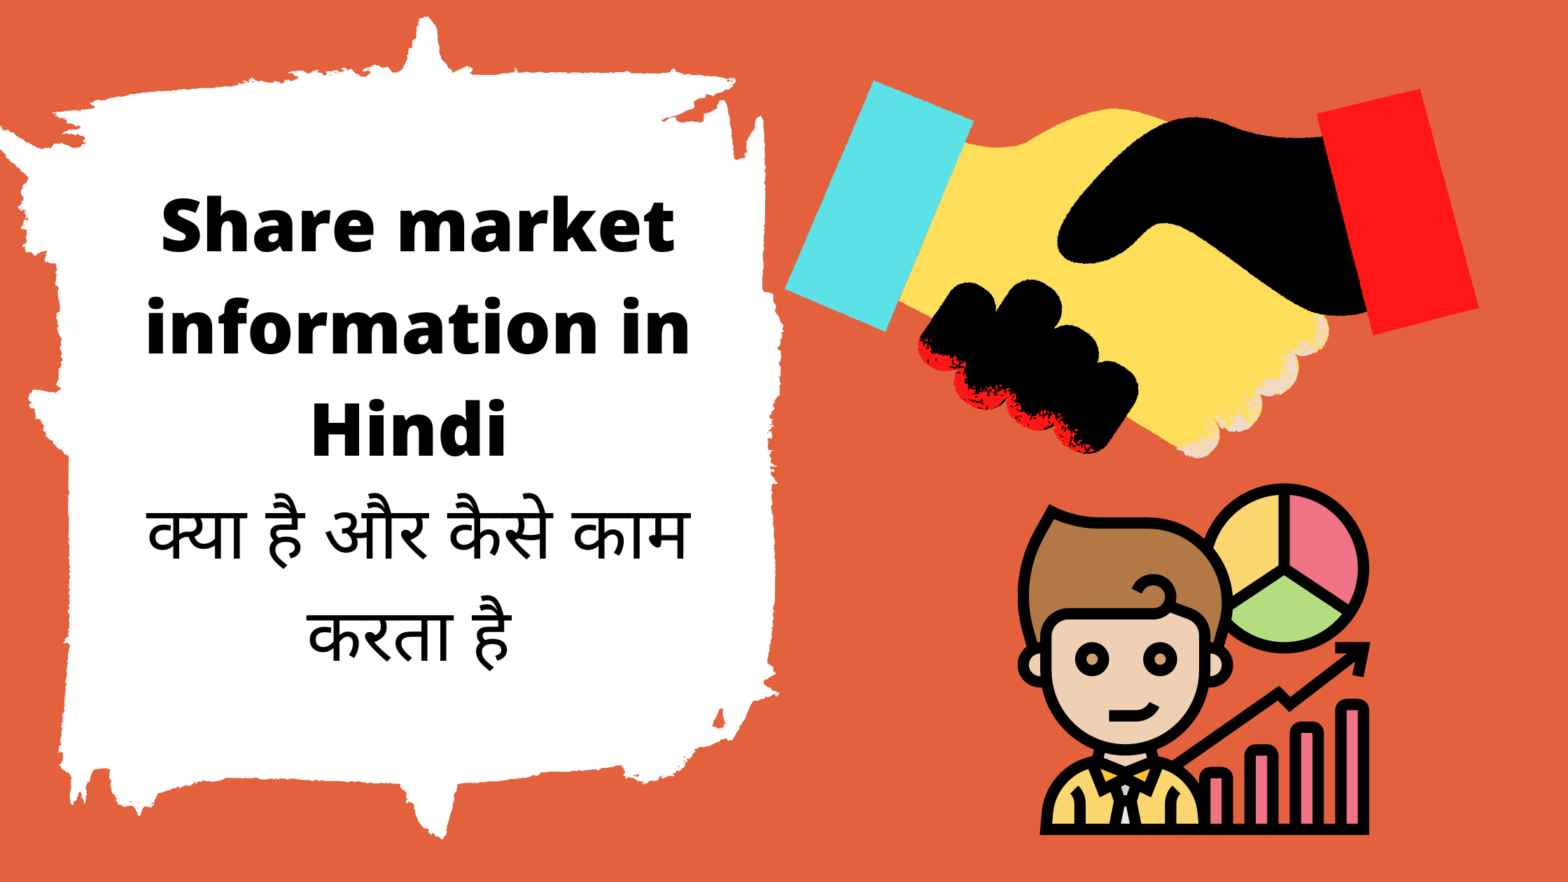 Share market information